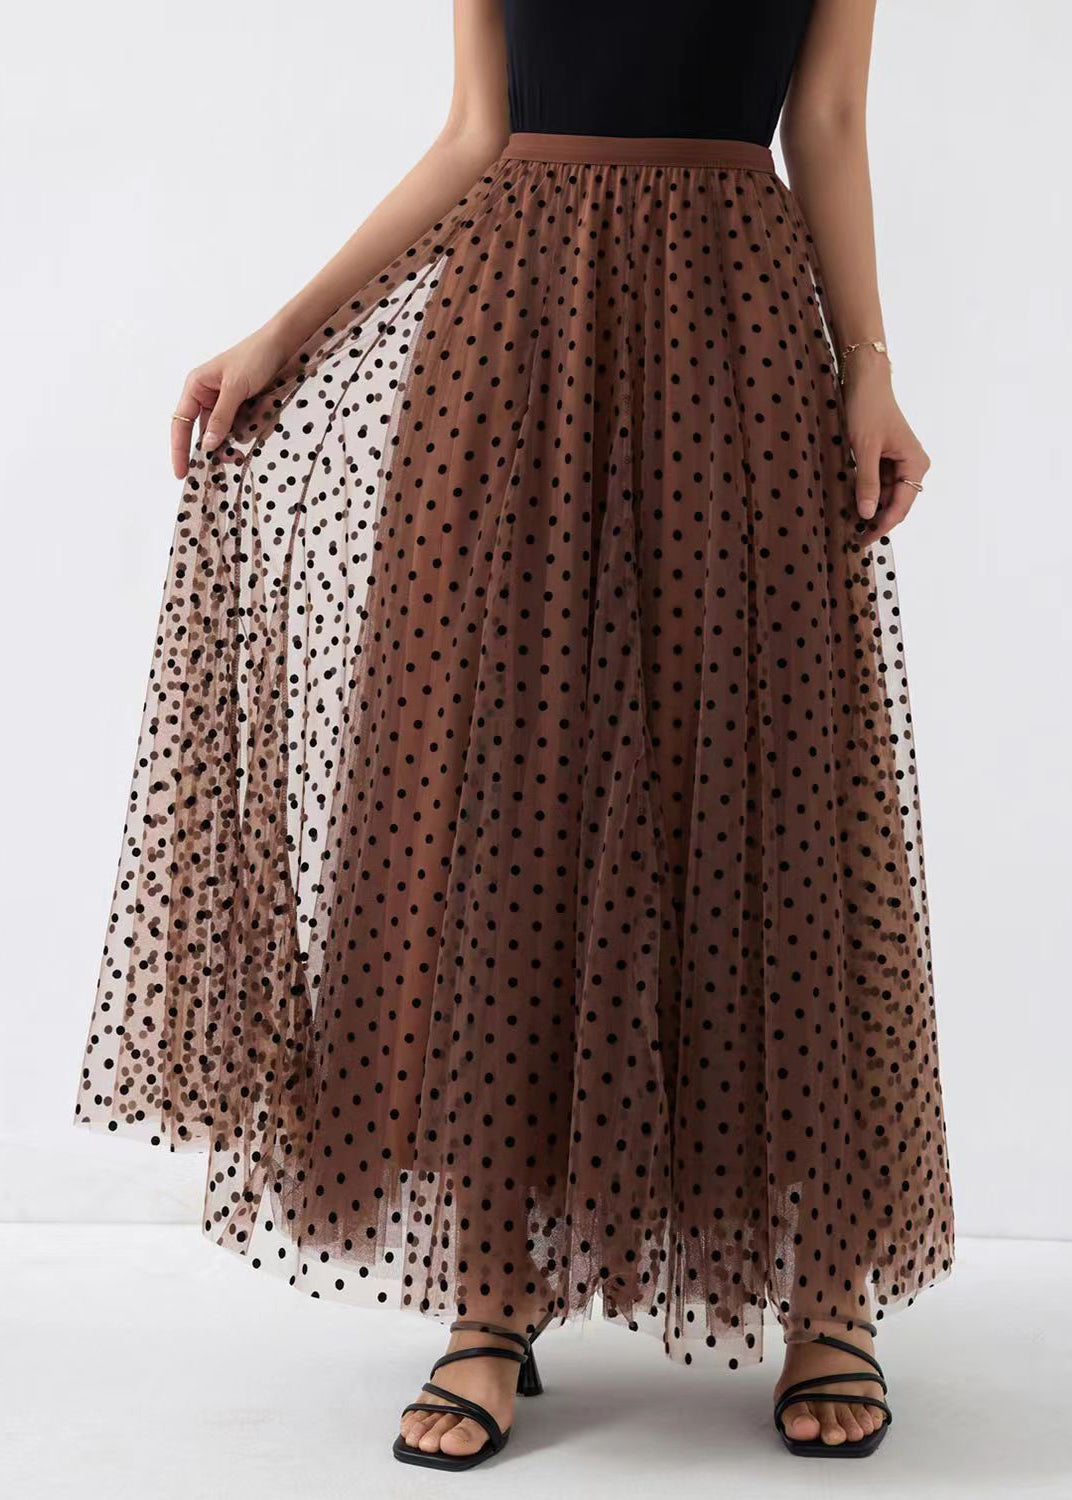 Chic Coffee Dot Wrinkled High Waist Tulle Skirt Spring